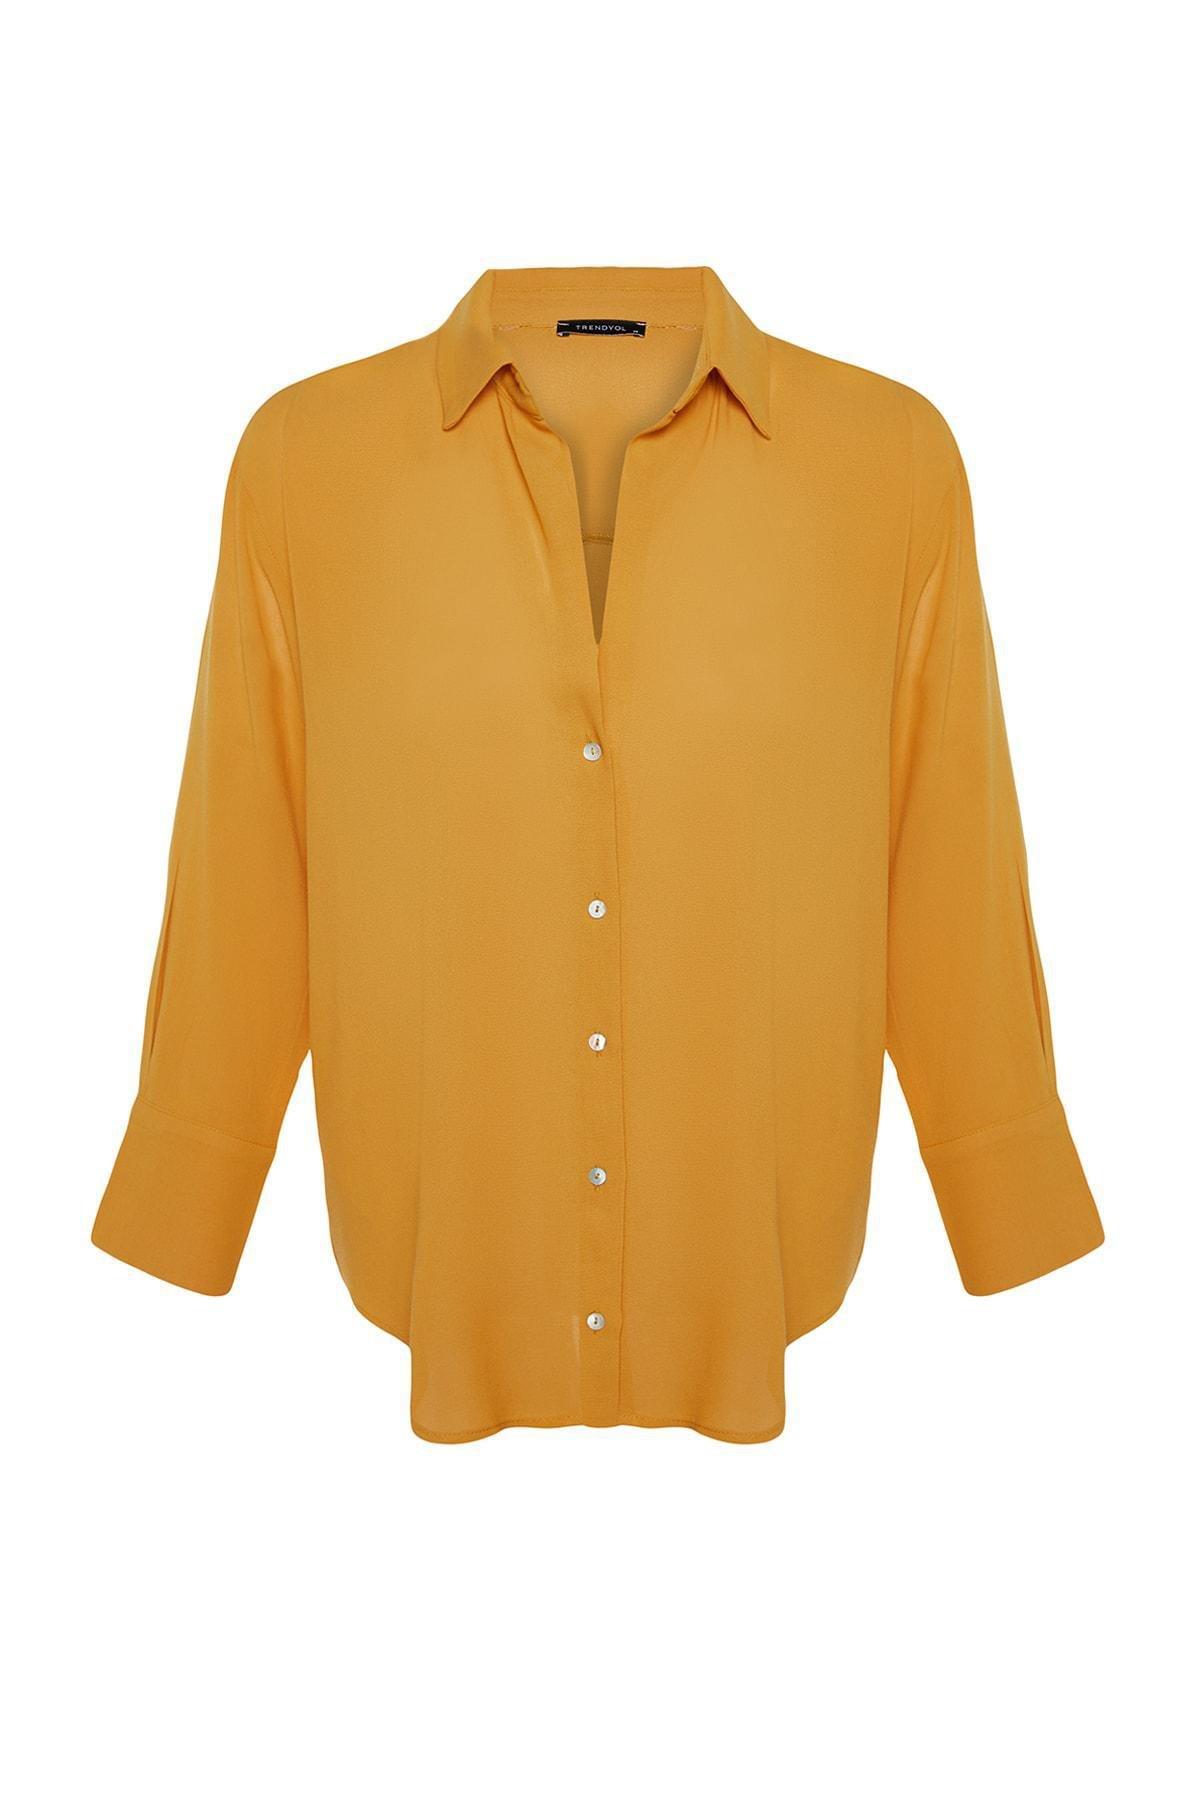 Trendyol - Brown Woven Shirt